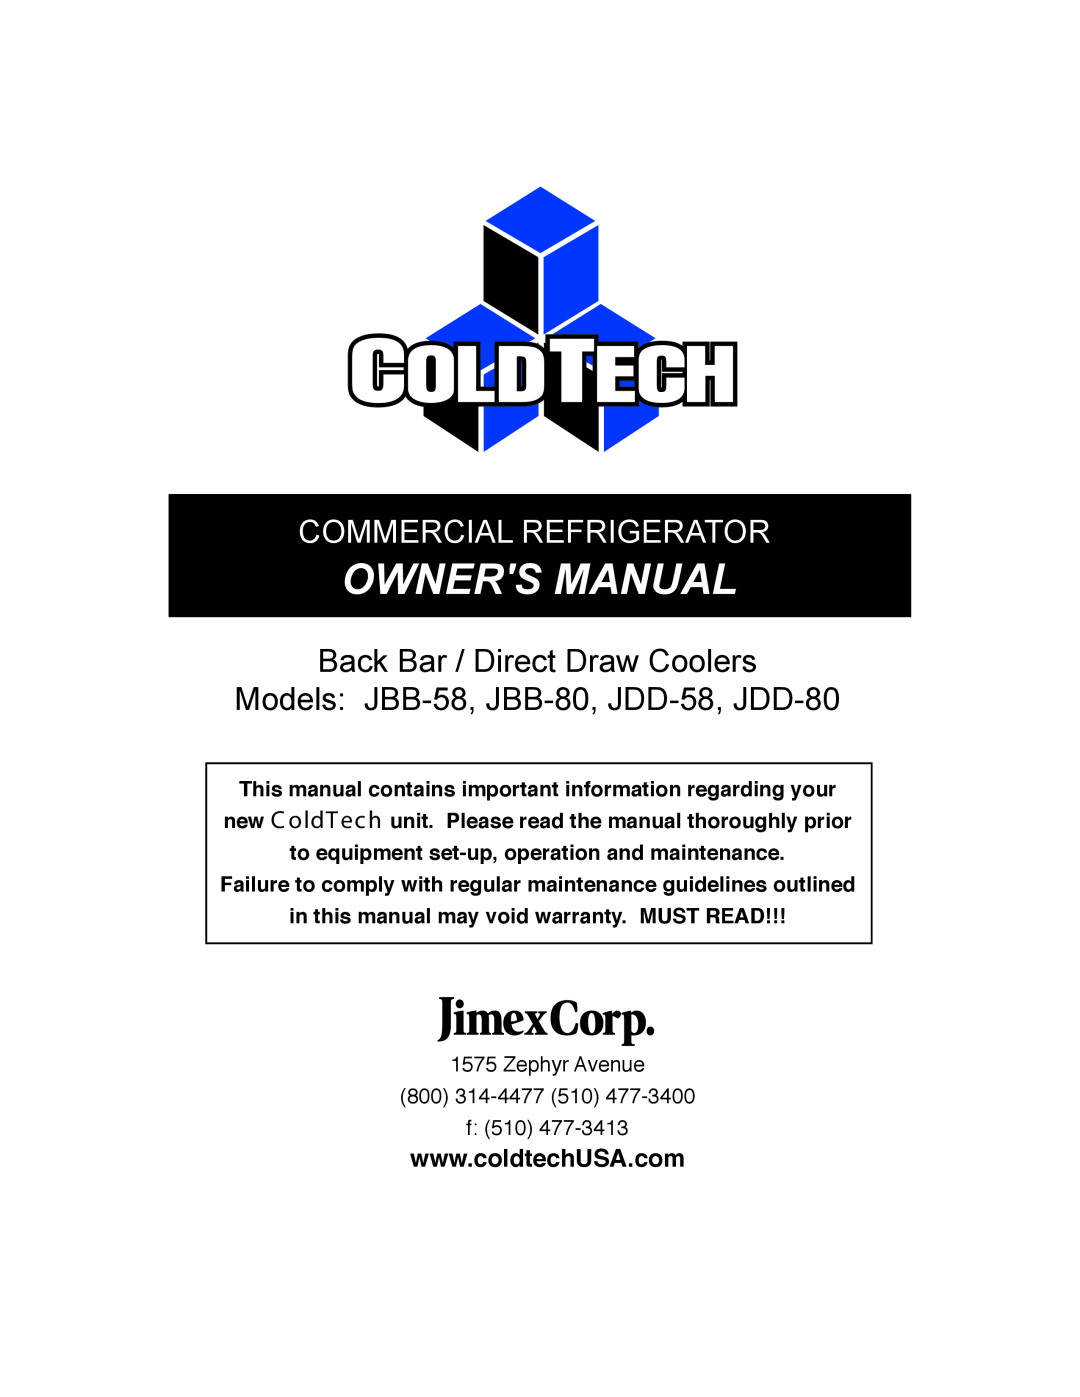 ColdTech owner manual Back Bar / Direct Draw Coolers, Models JBB-58, JBB-80, JDD-58, JDD-80, Commercial Refrigerator 